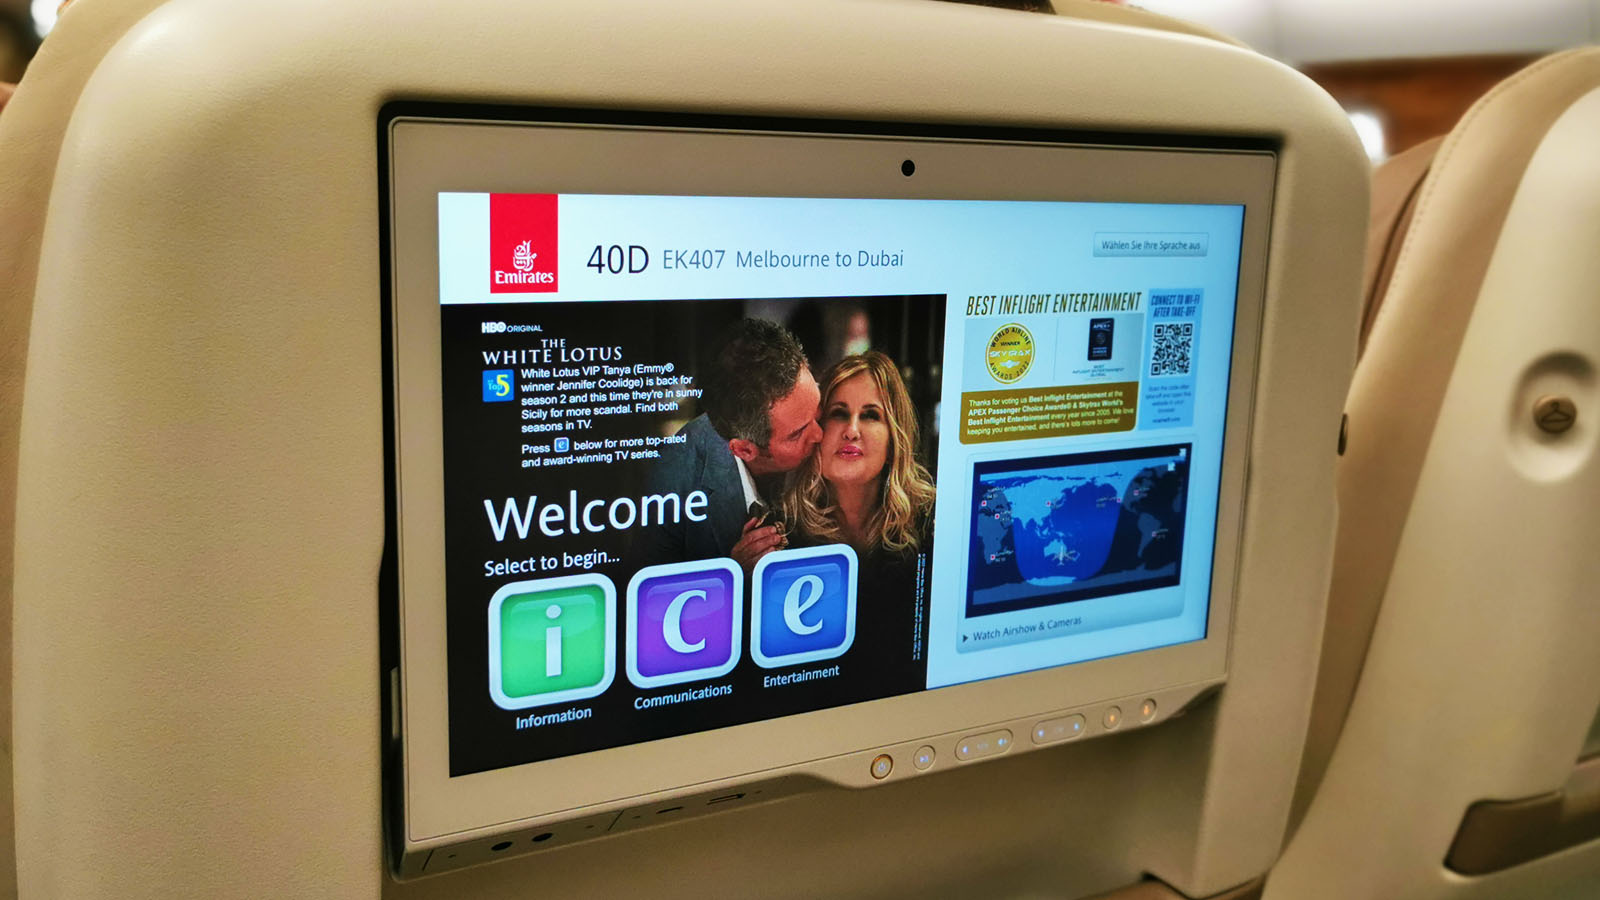 Premium Economy entertainment screen on Emirates' Airbus A380 from Melbourne